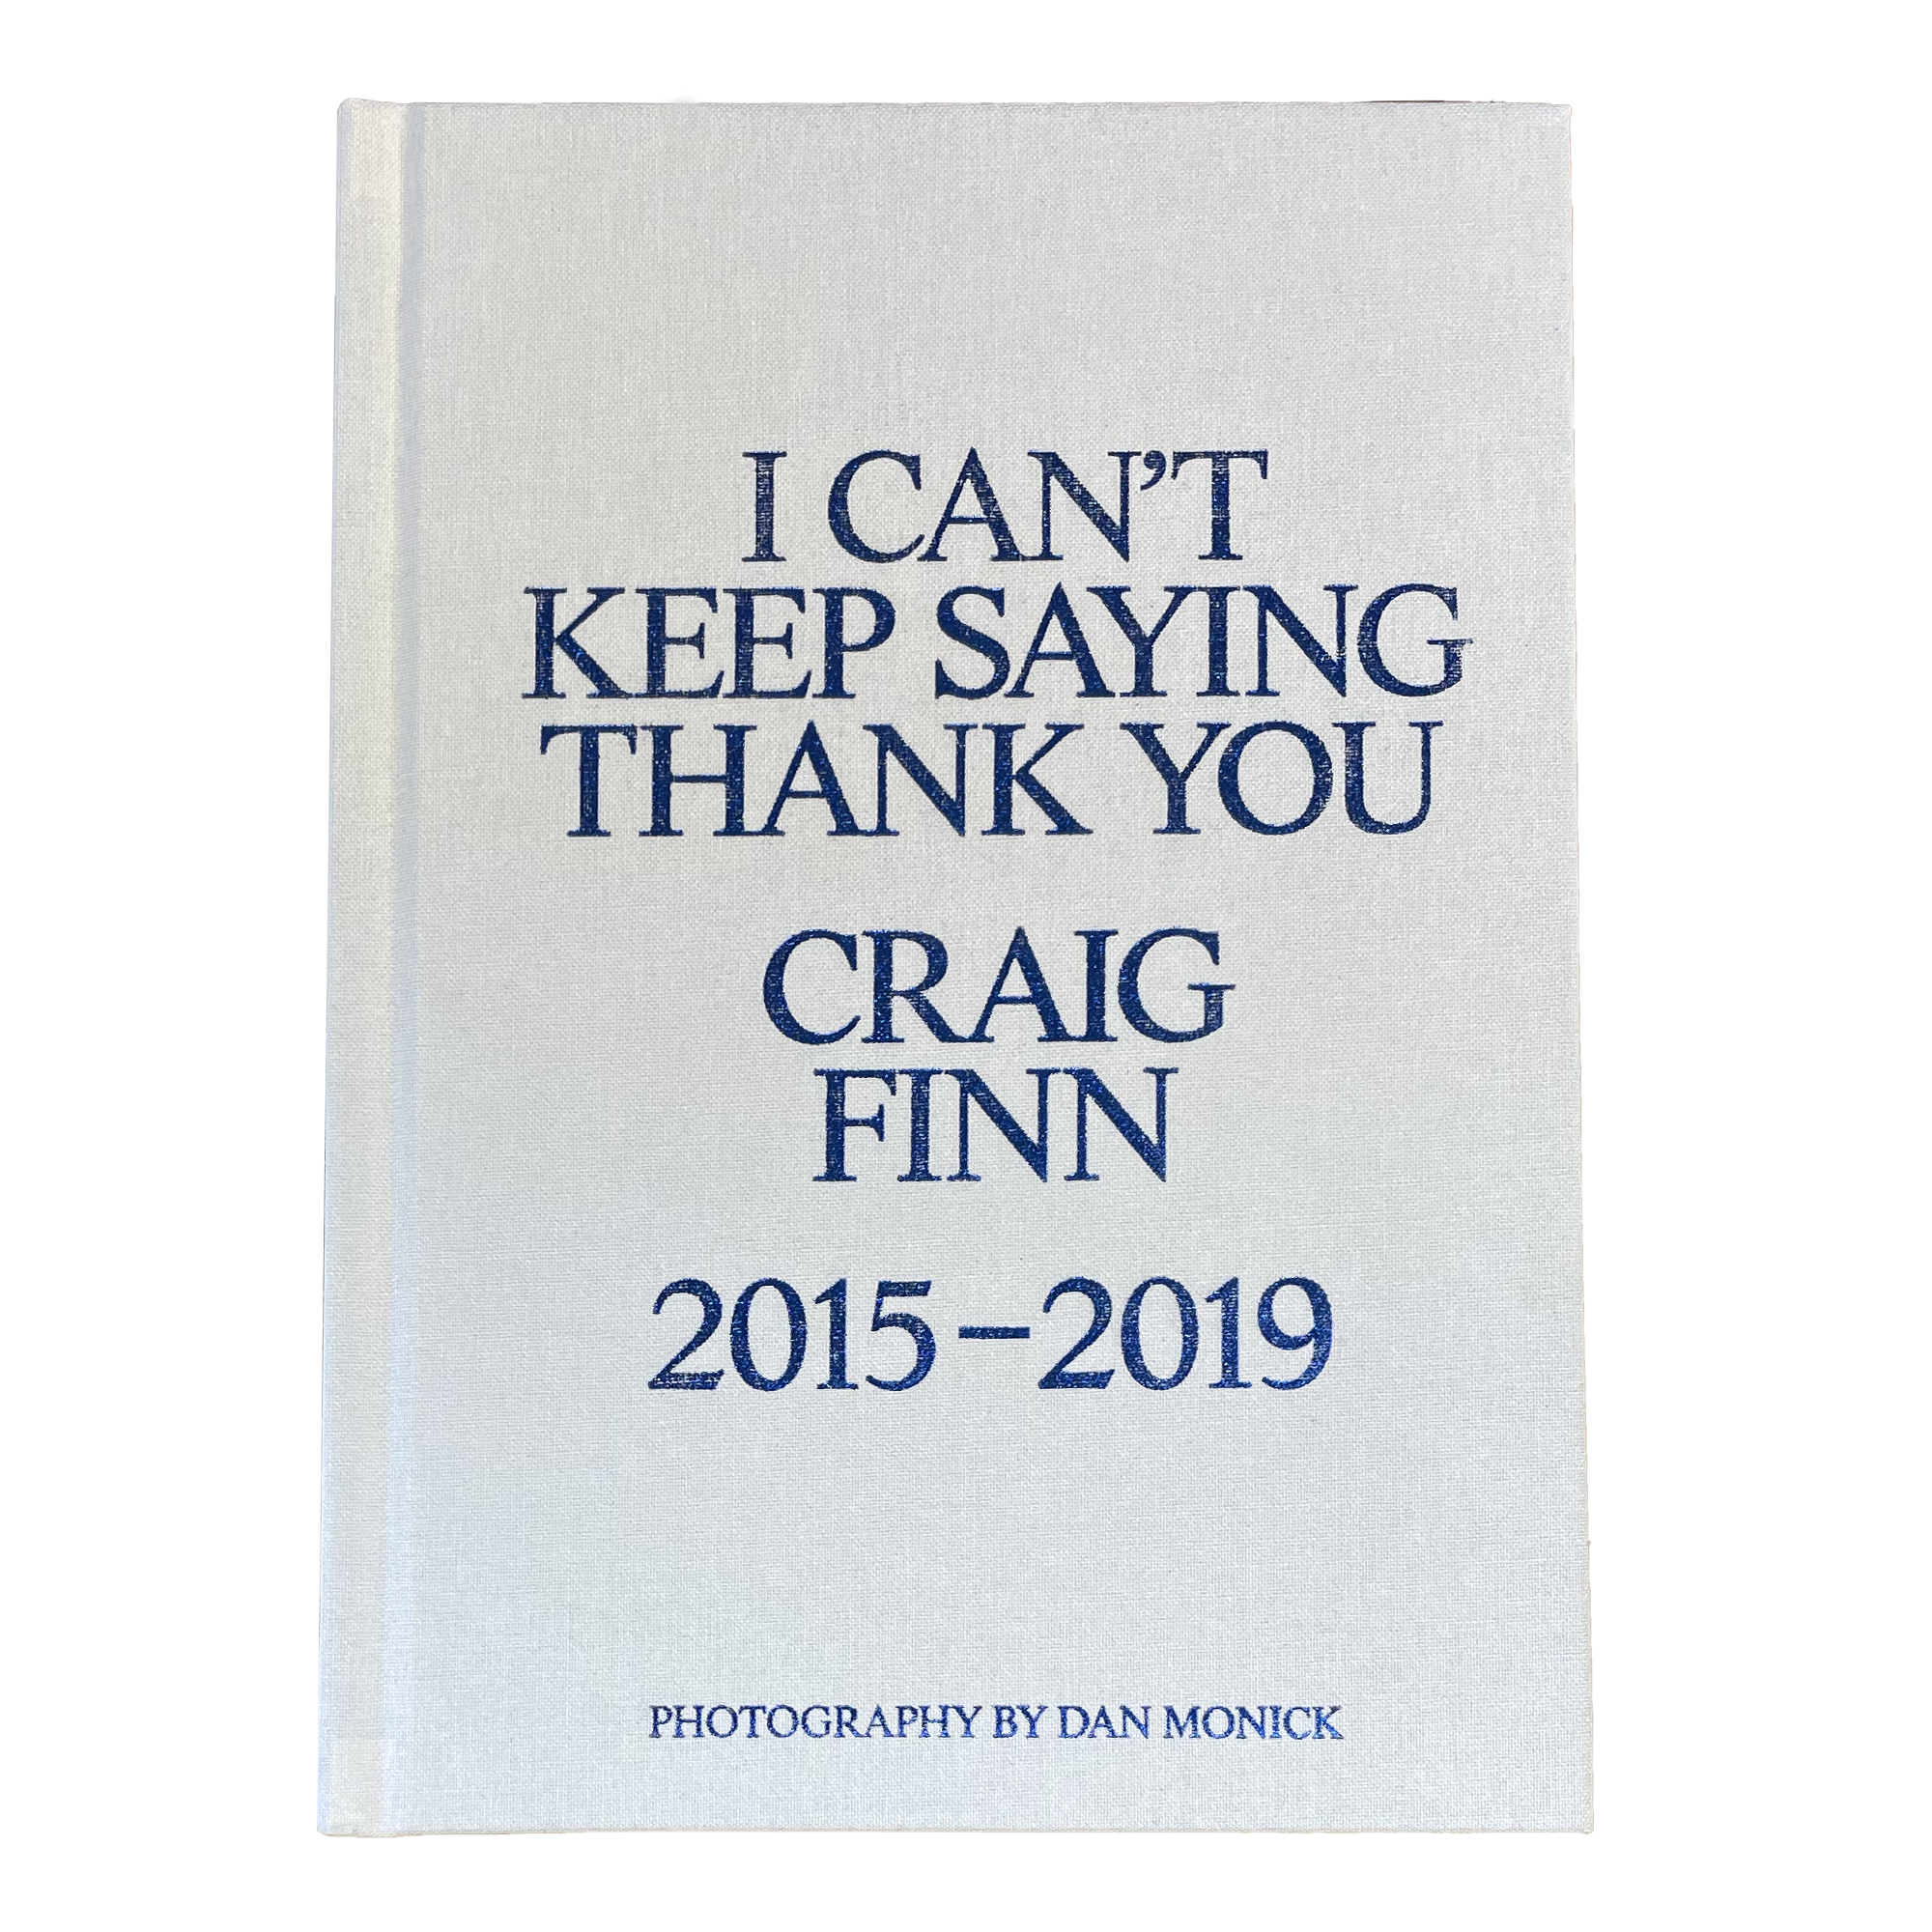 Craig Finn - I Can't Keep Saying Thank You Book